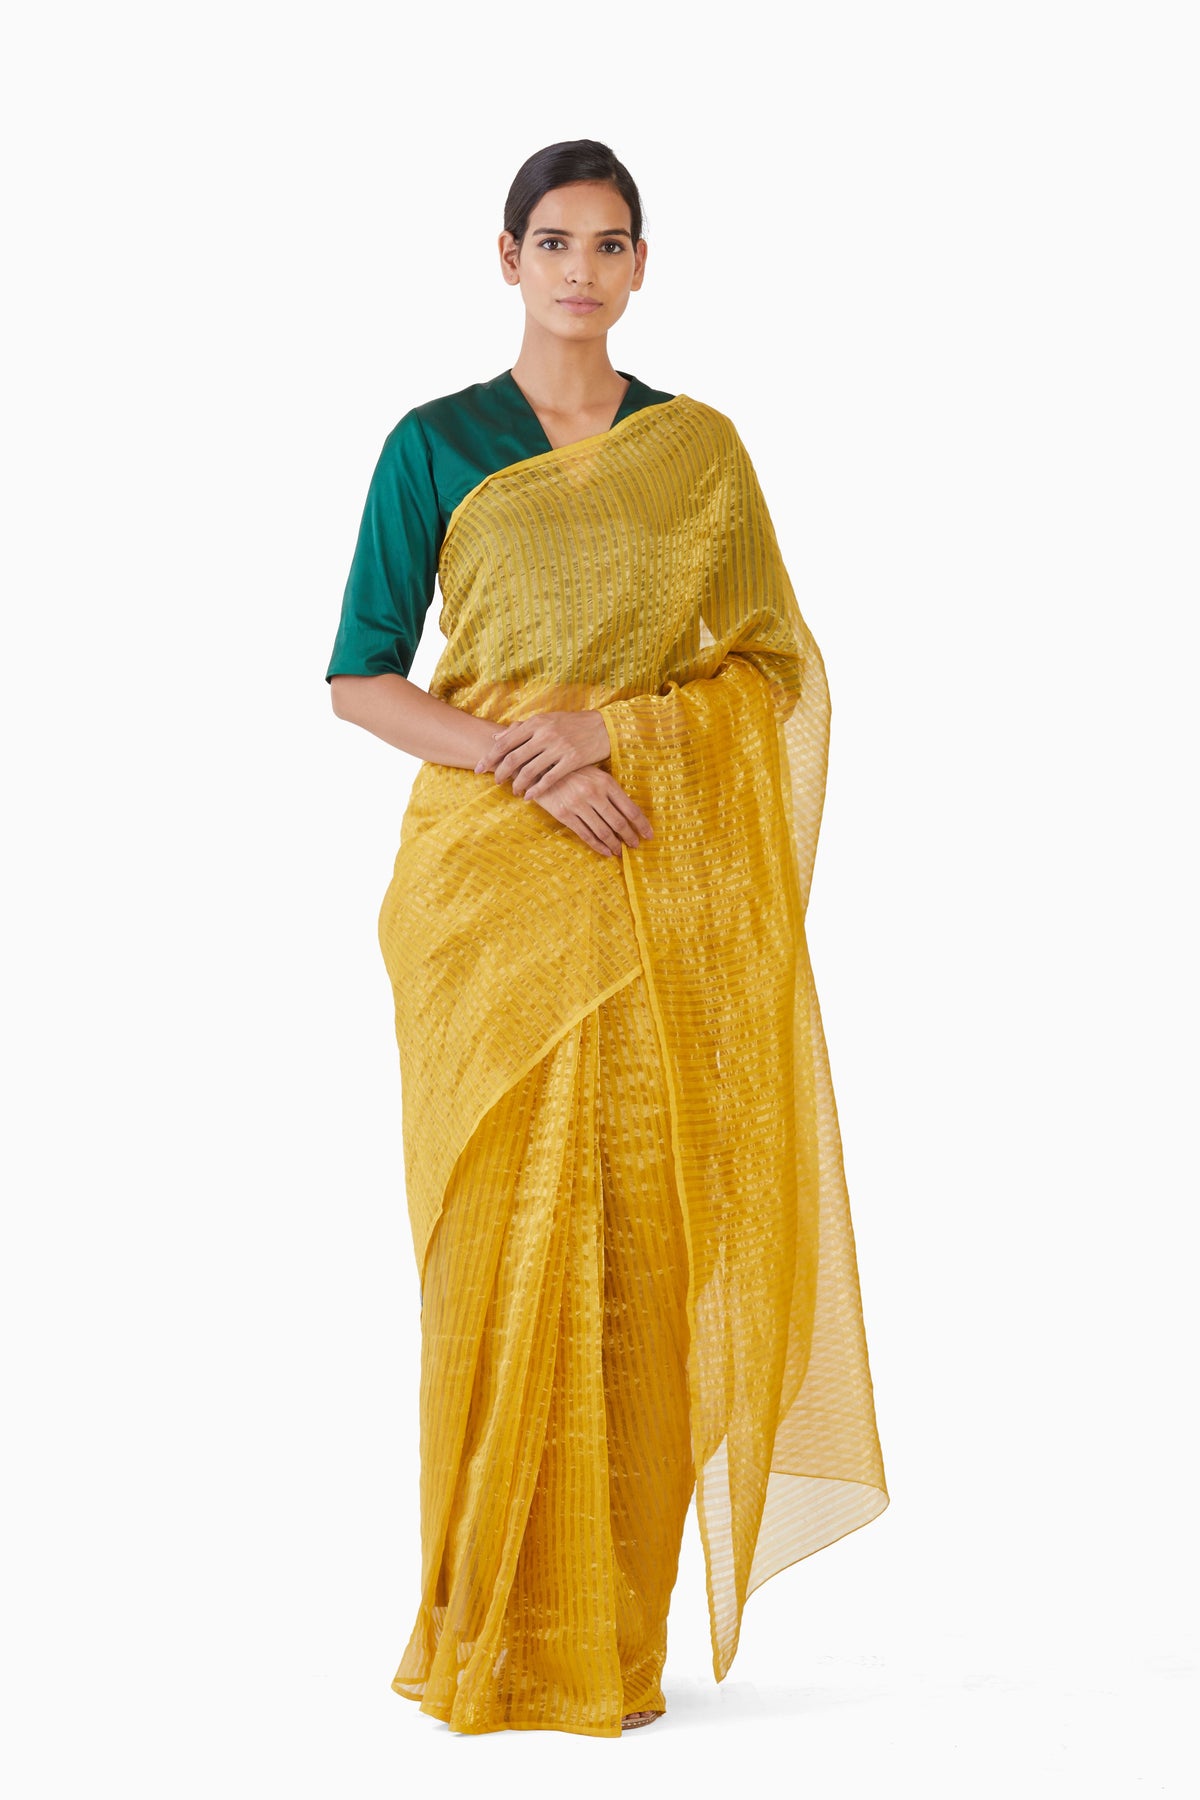 Handwoven yellow saree